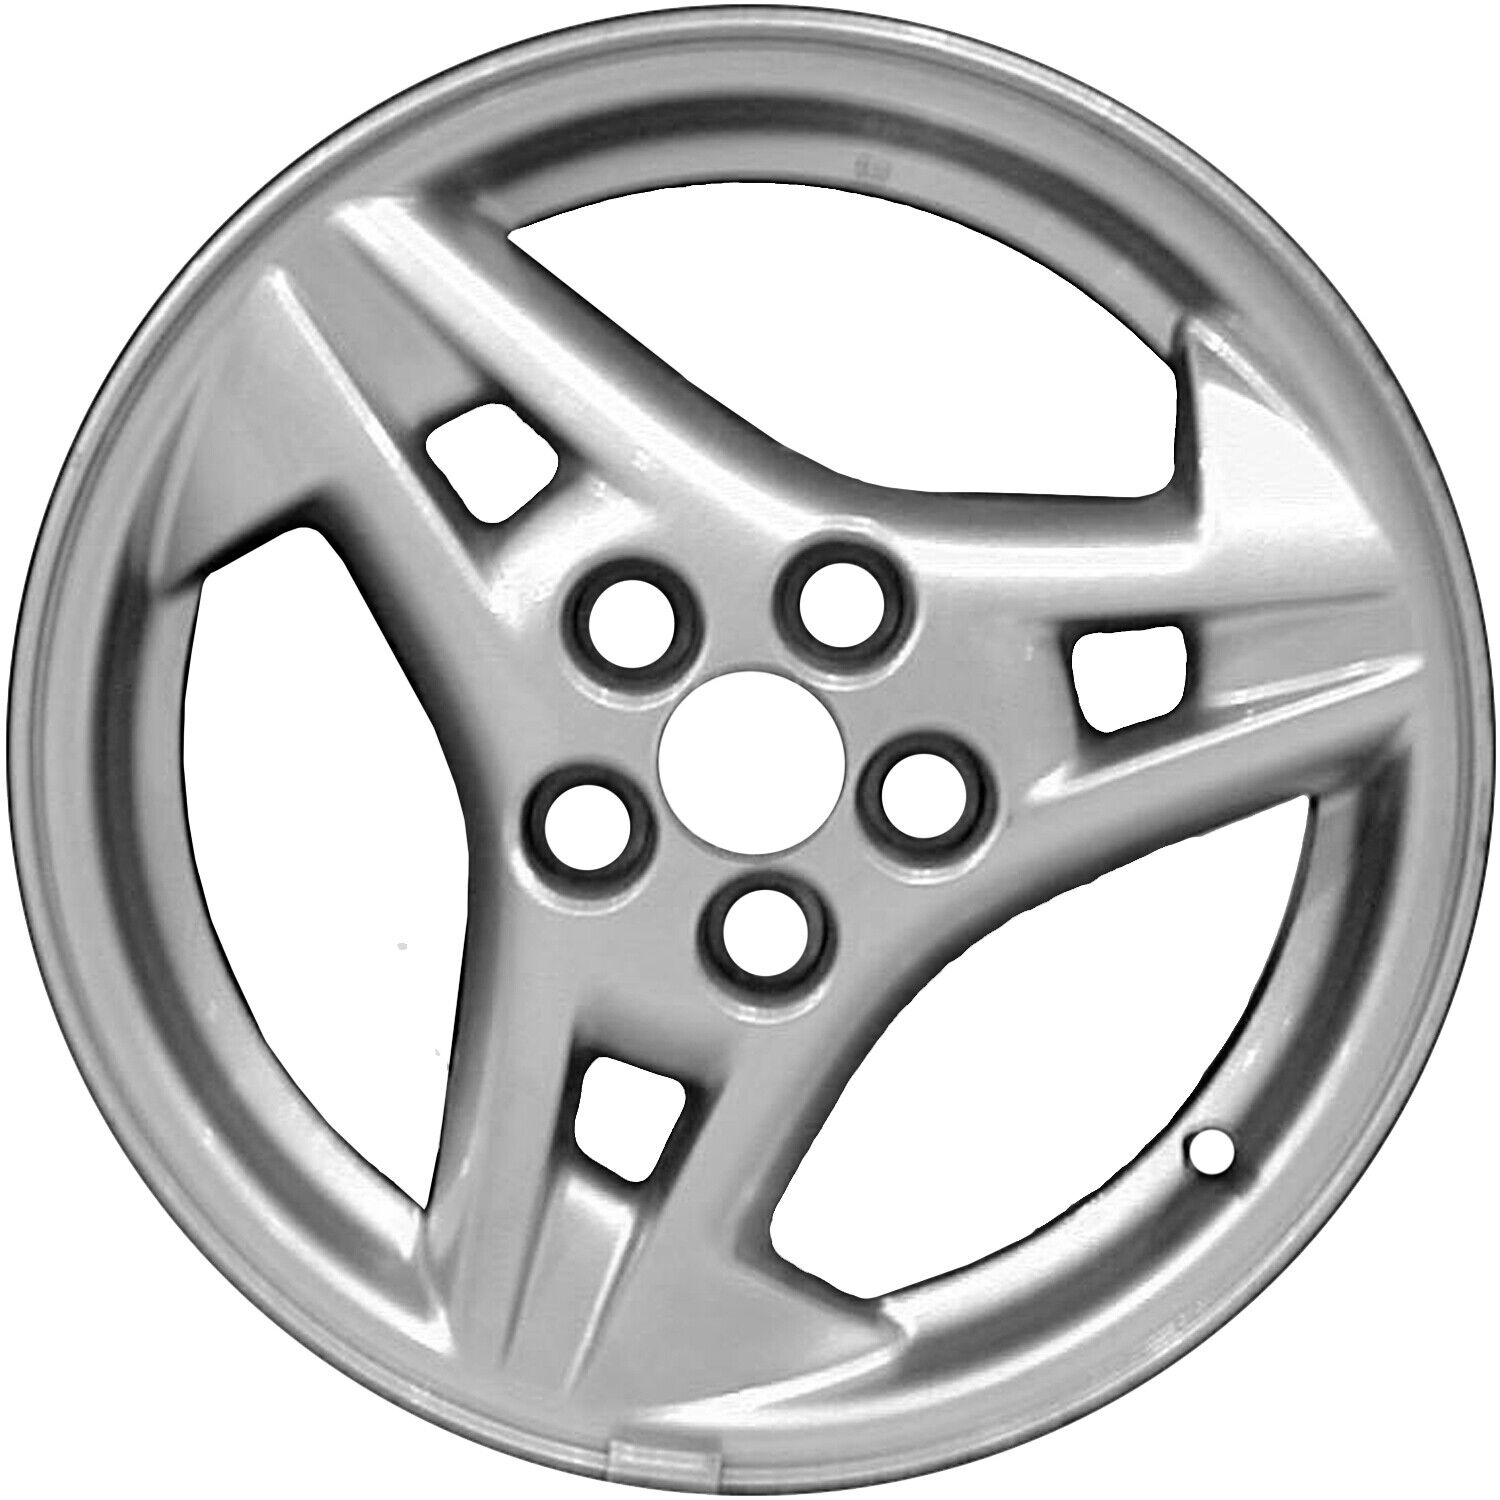 06560 Reconditioned OEM Aluminum Wheel 15x6 fits 2003-2005 Pontiac Sunfire